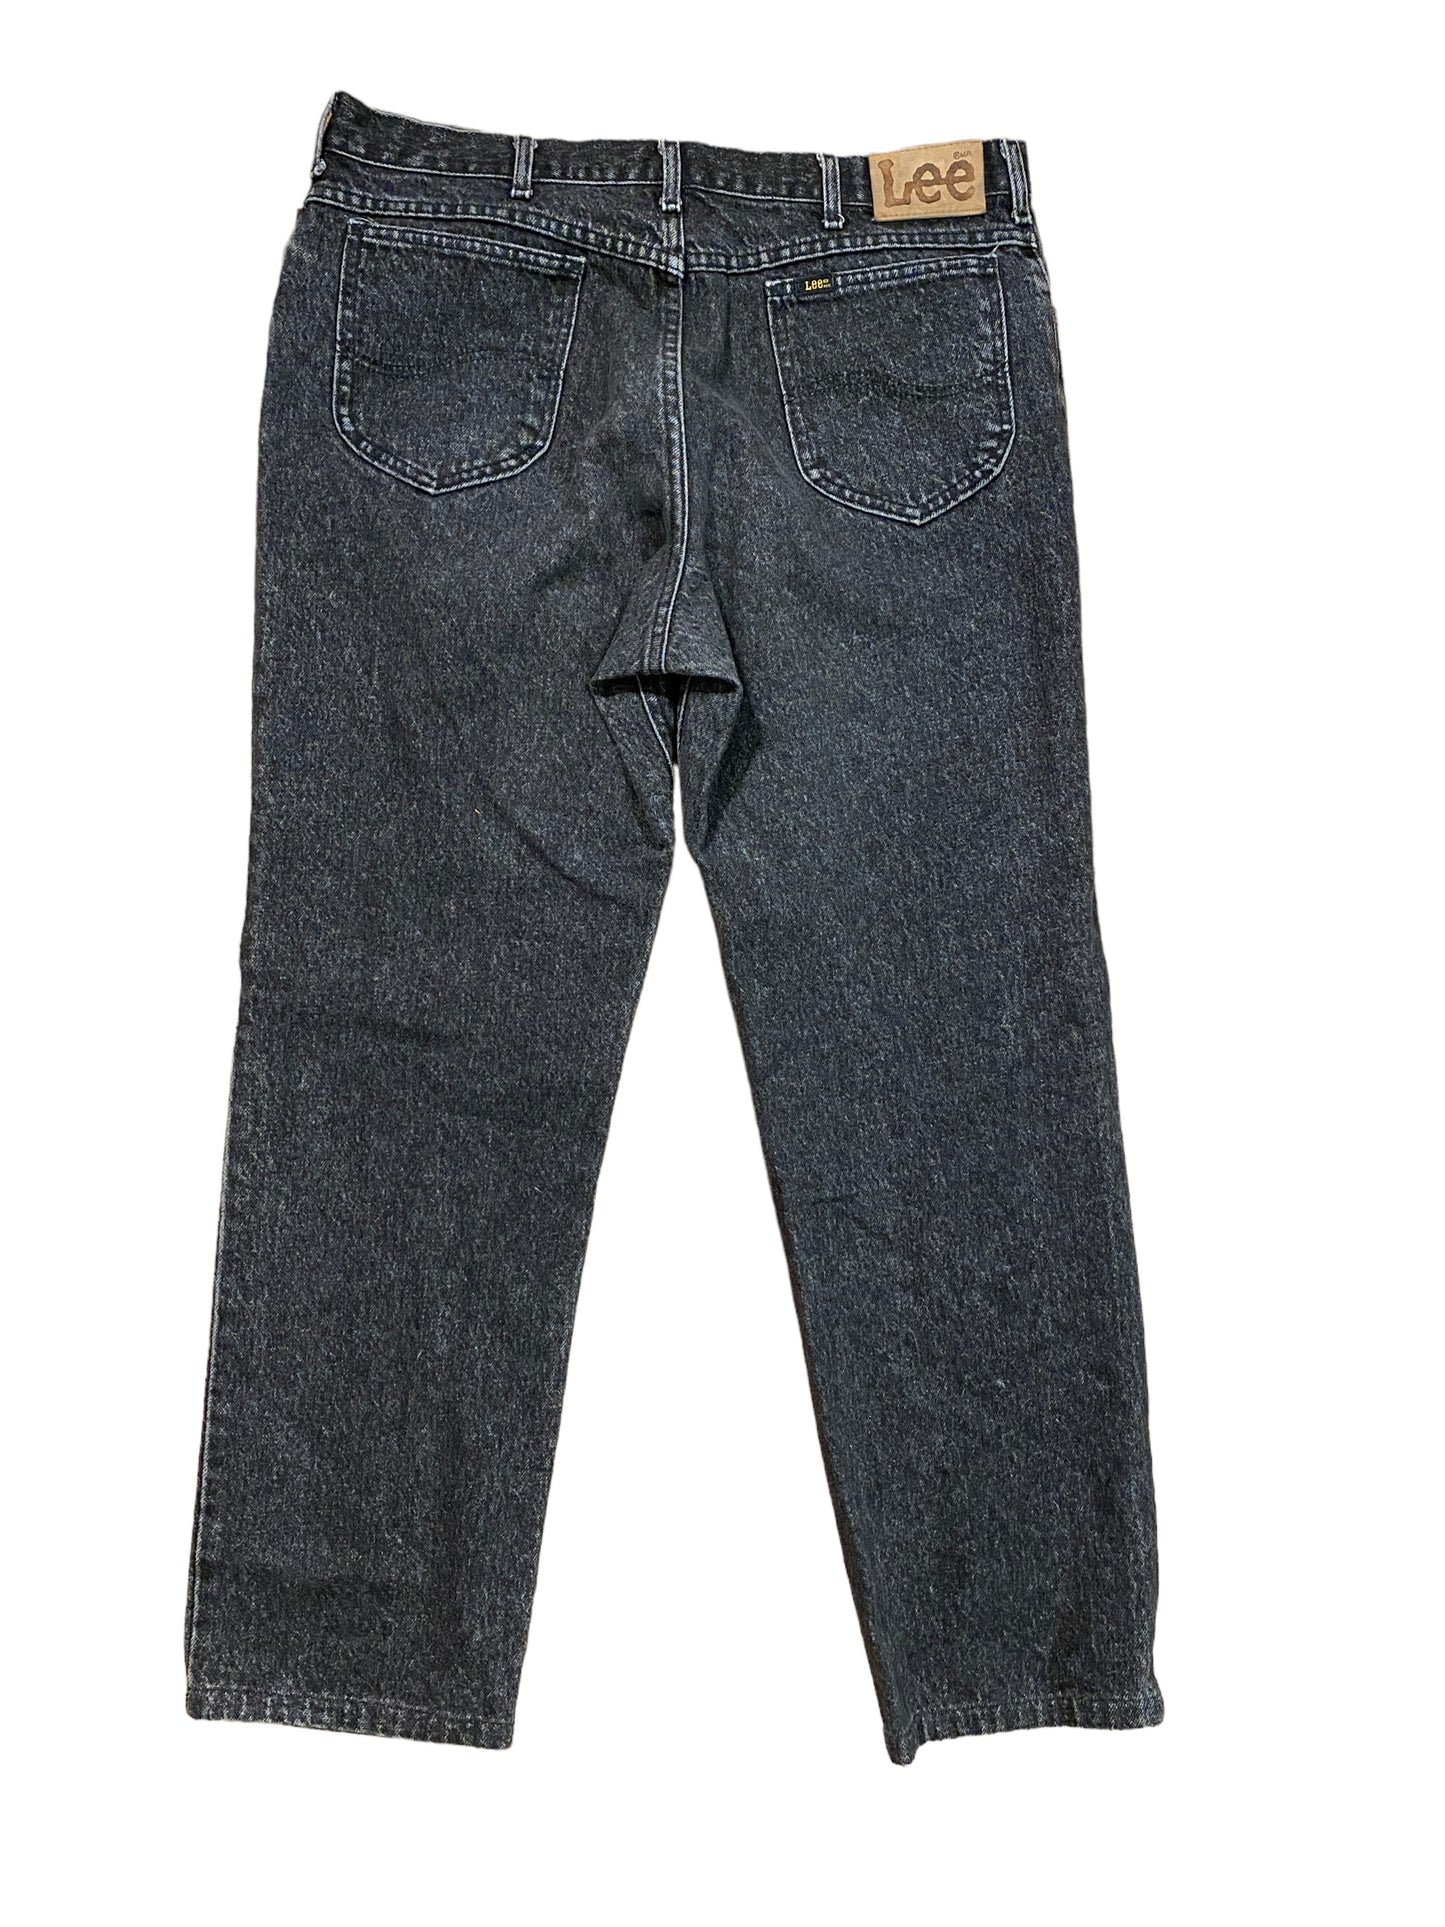 1990s Lee Jeans Black Stonewash Pants